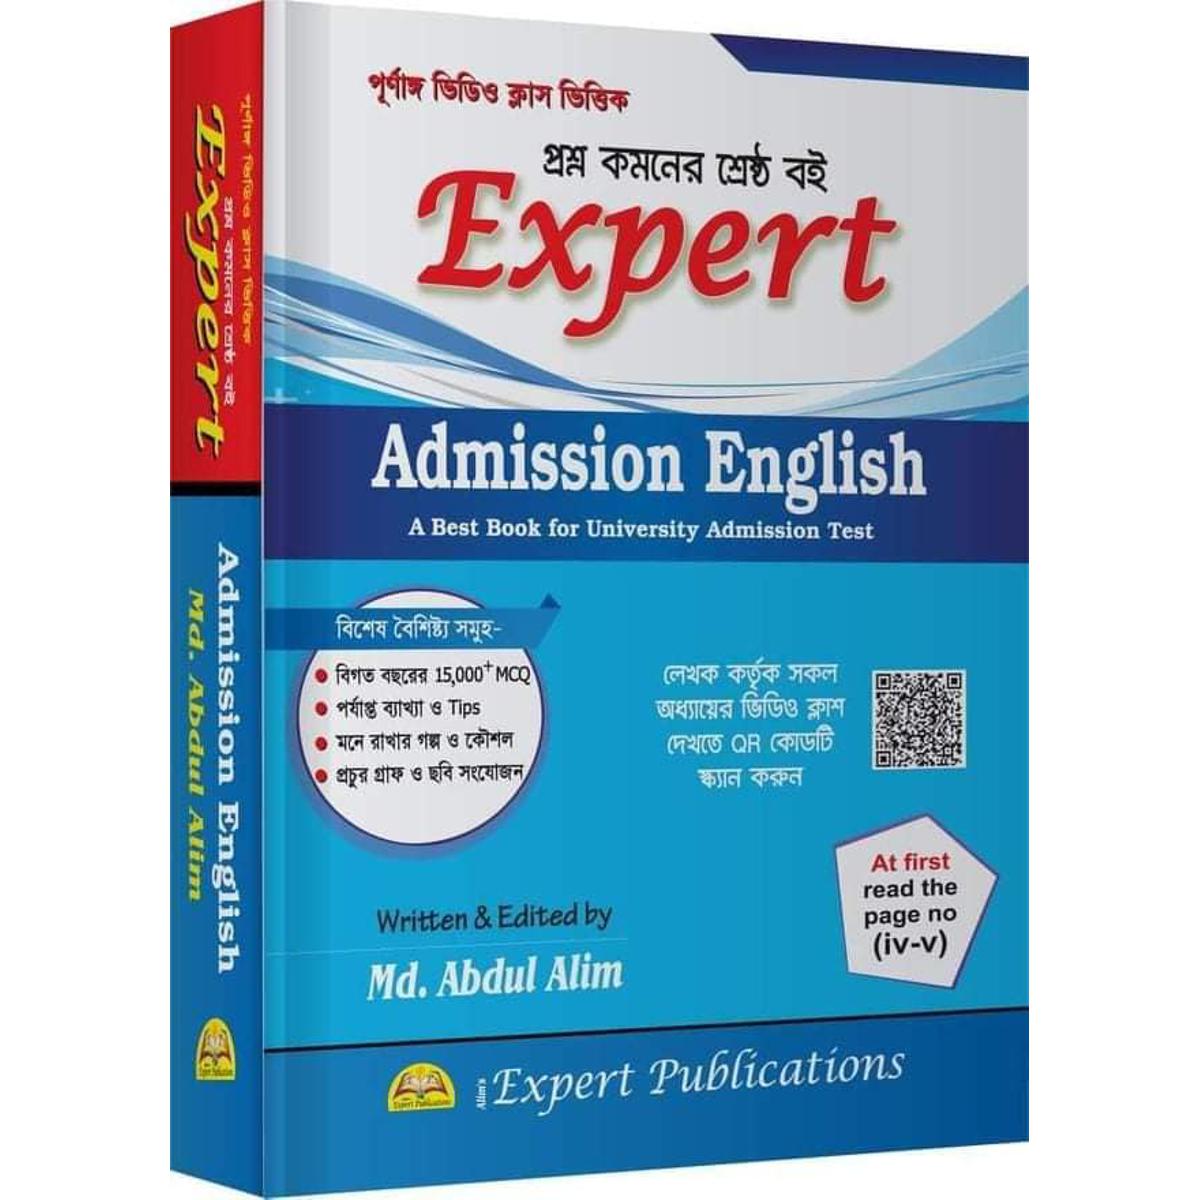 Expert Admission English